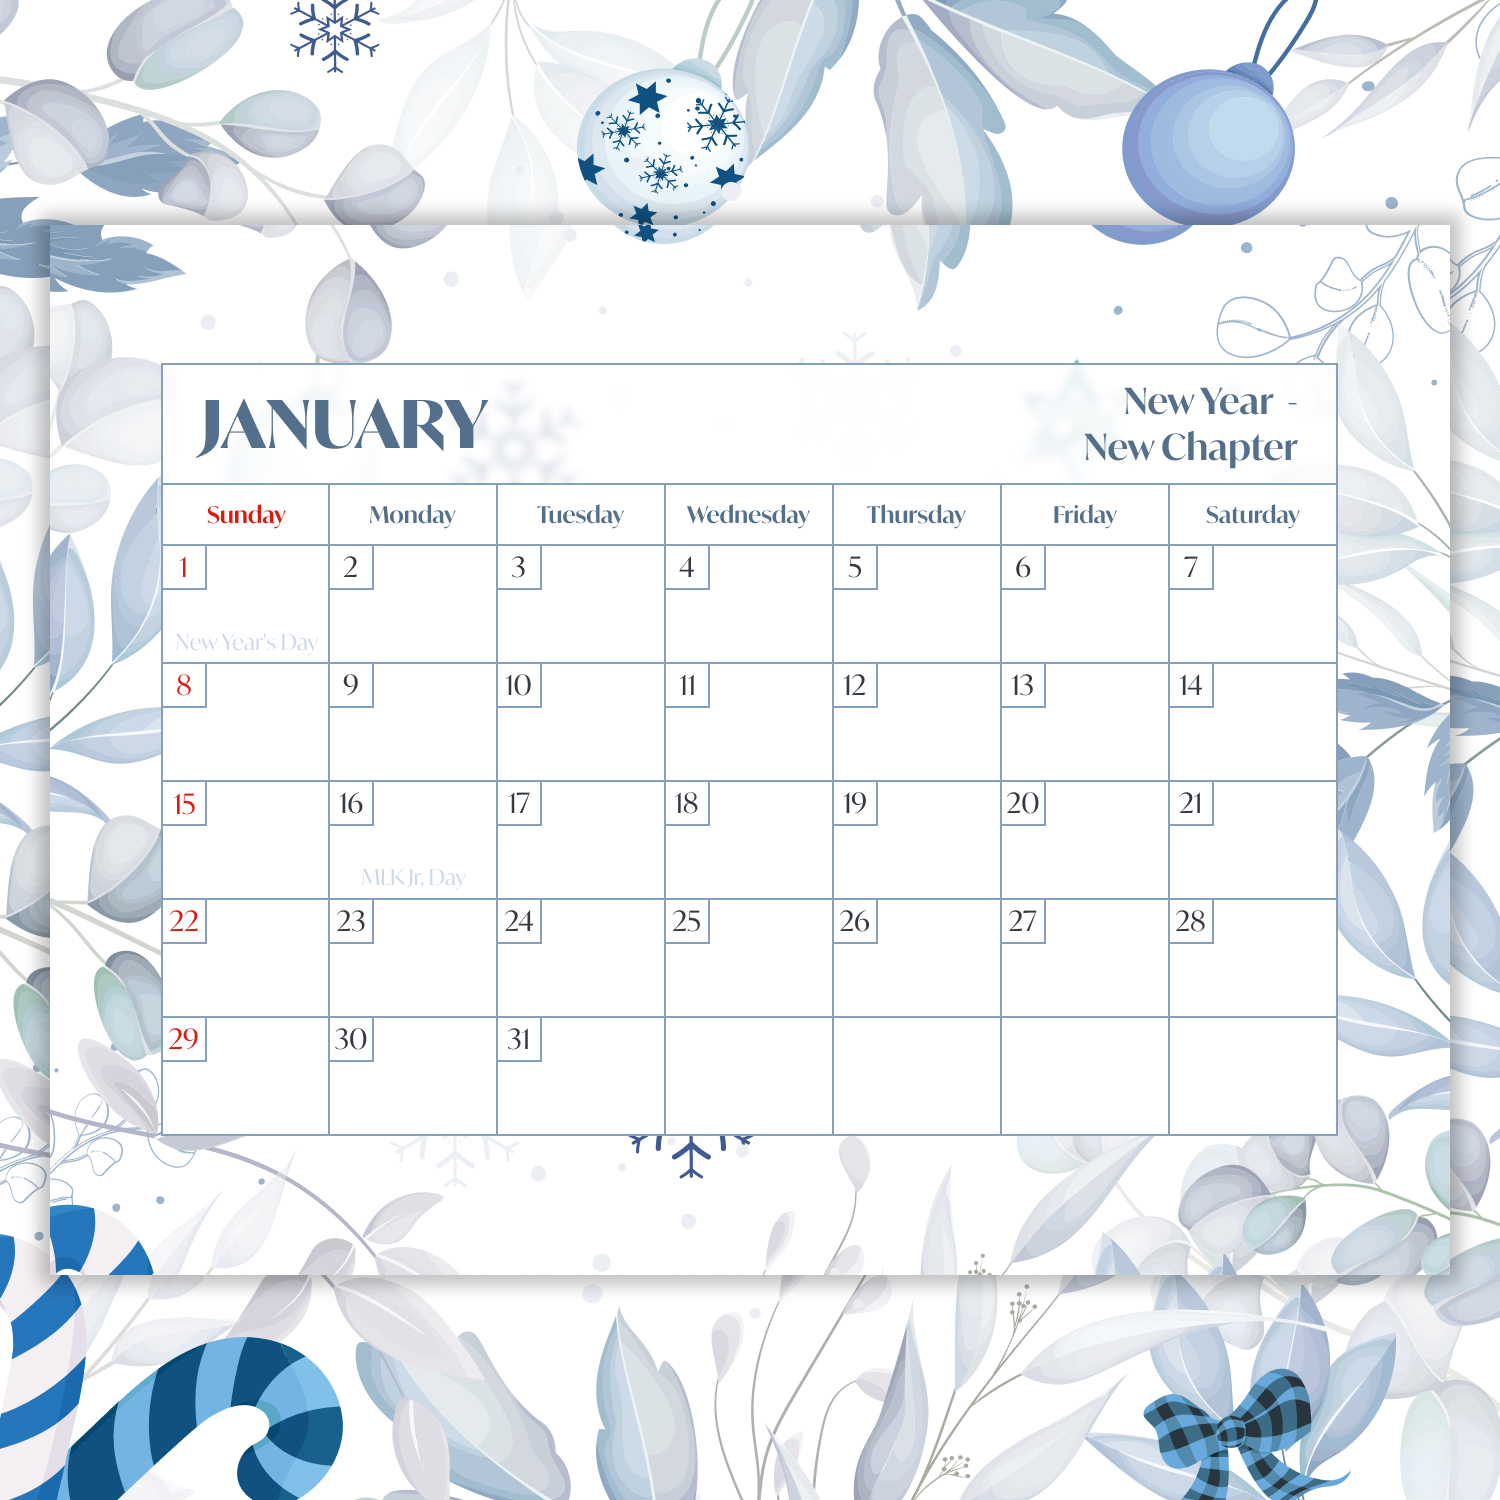 Free Printable January Calendar cover.